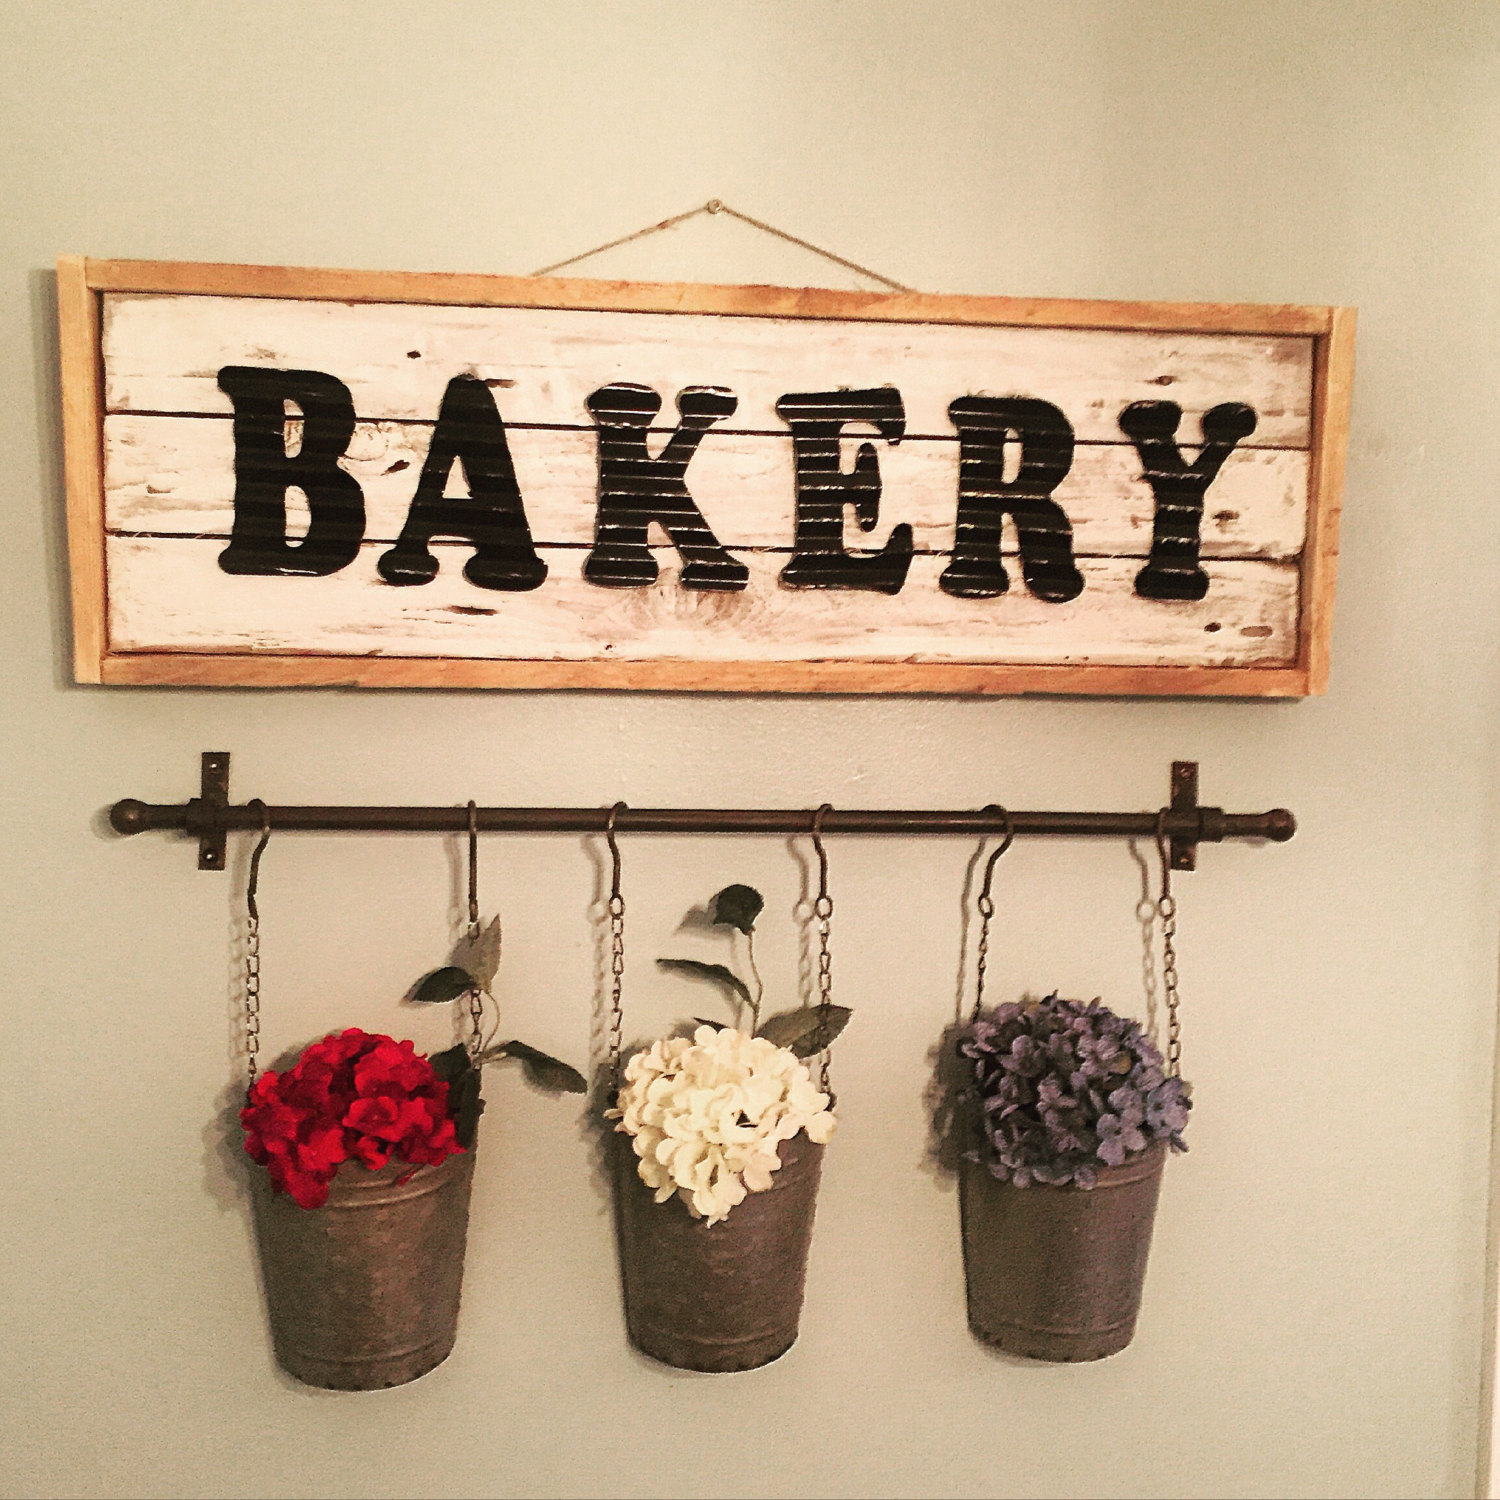 Bakery Wood Sign